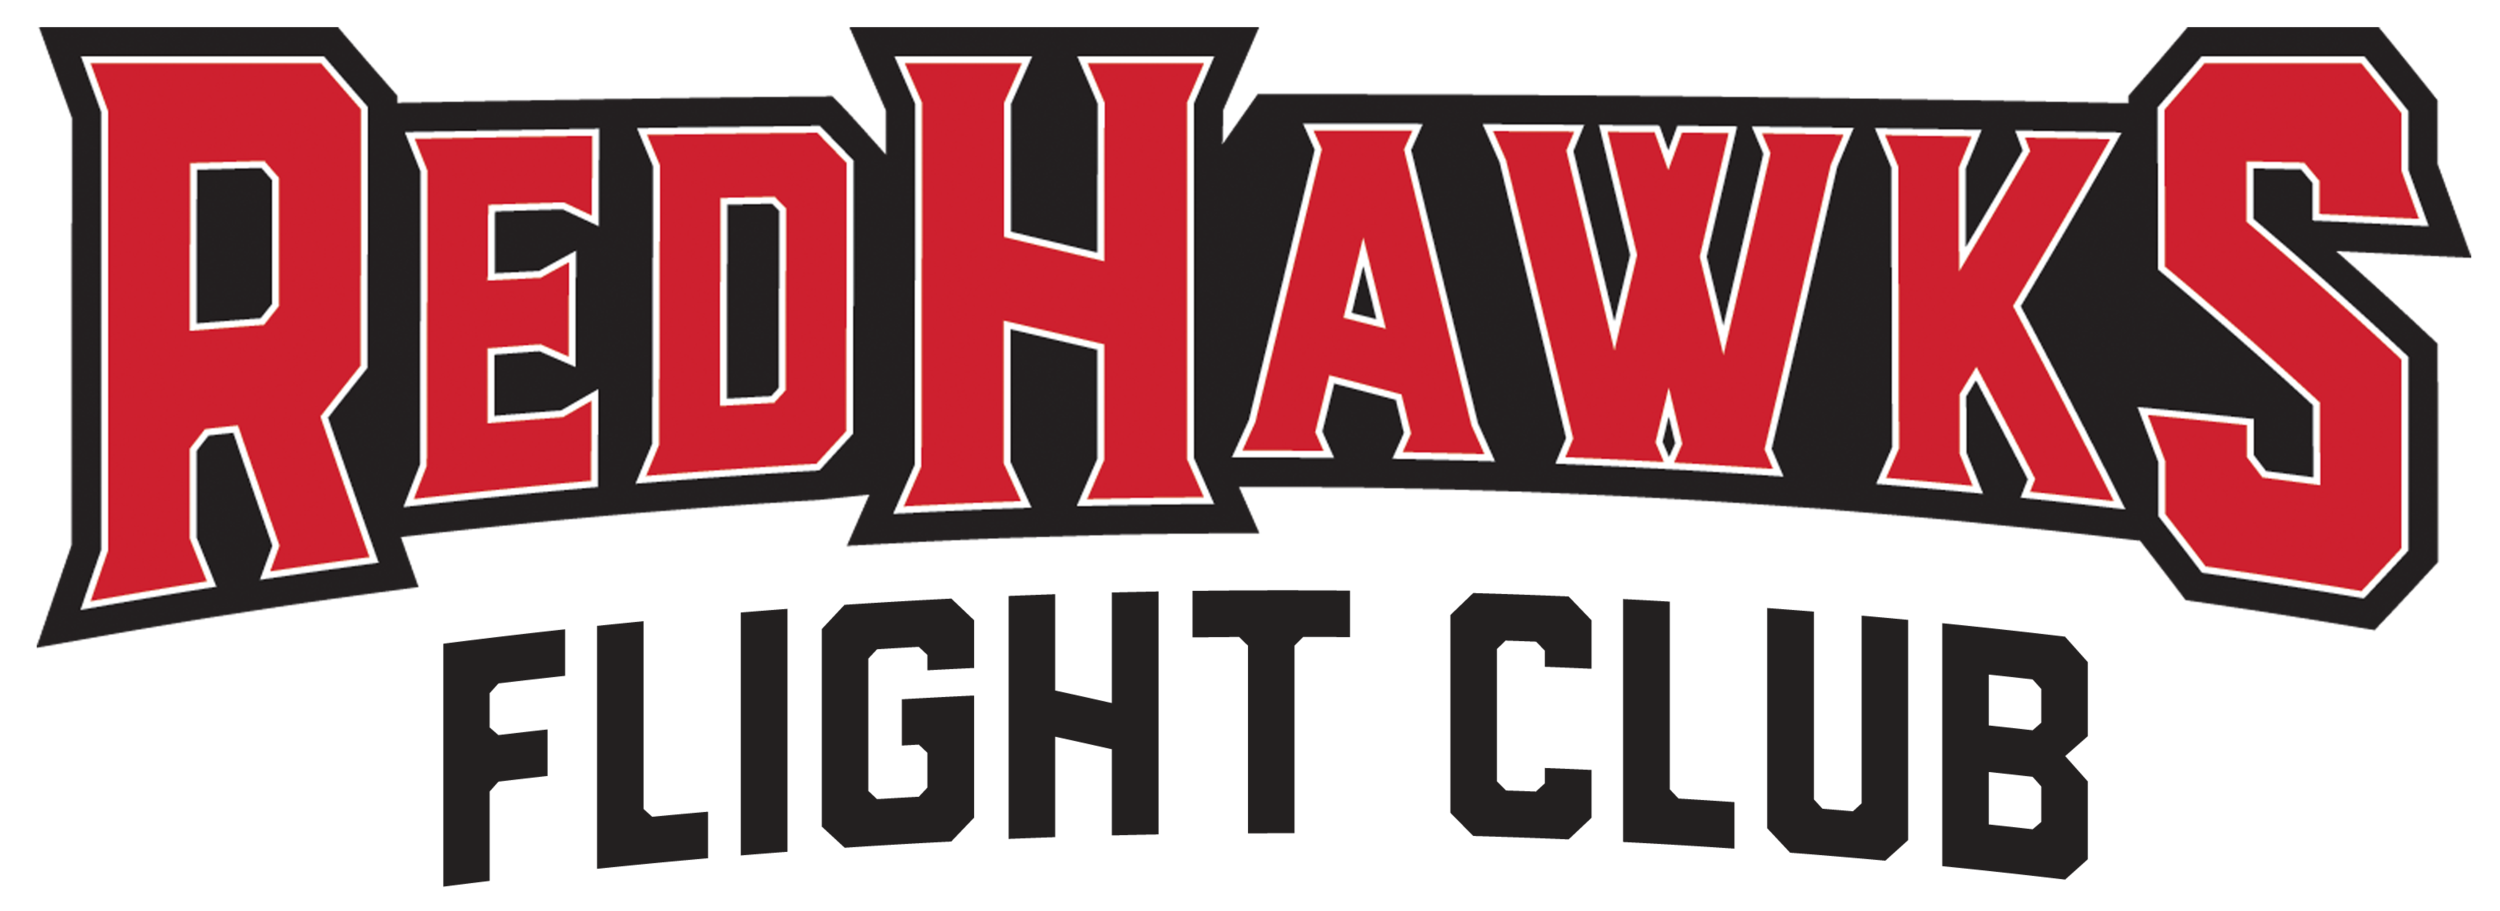 RedHawks Flight Club